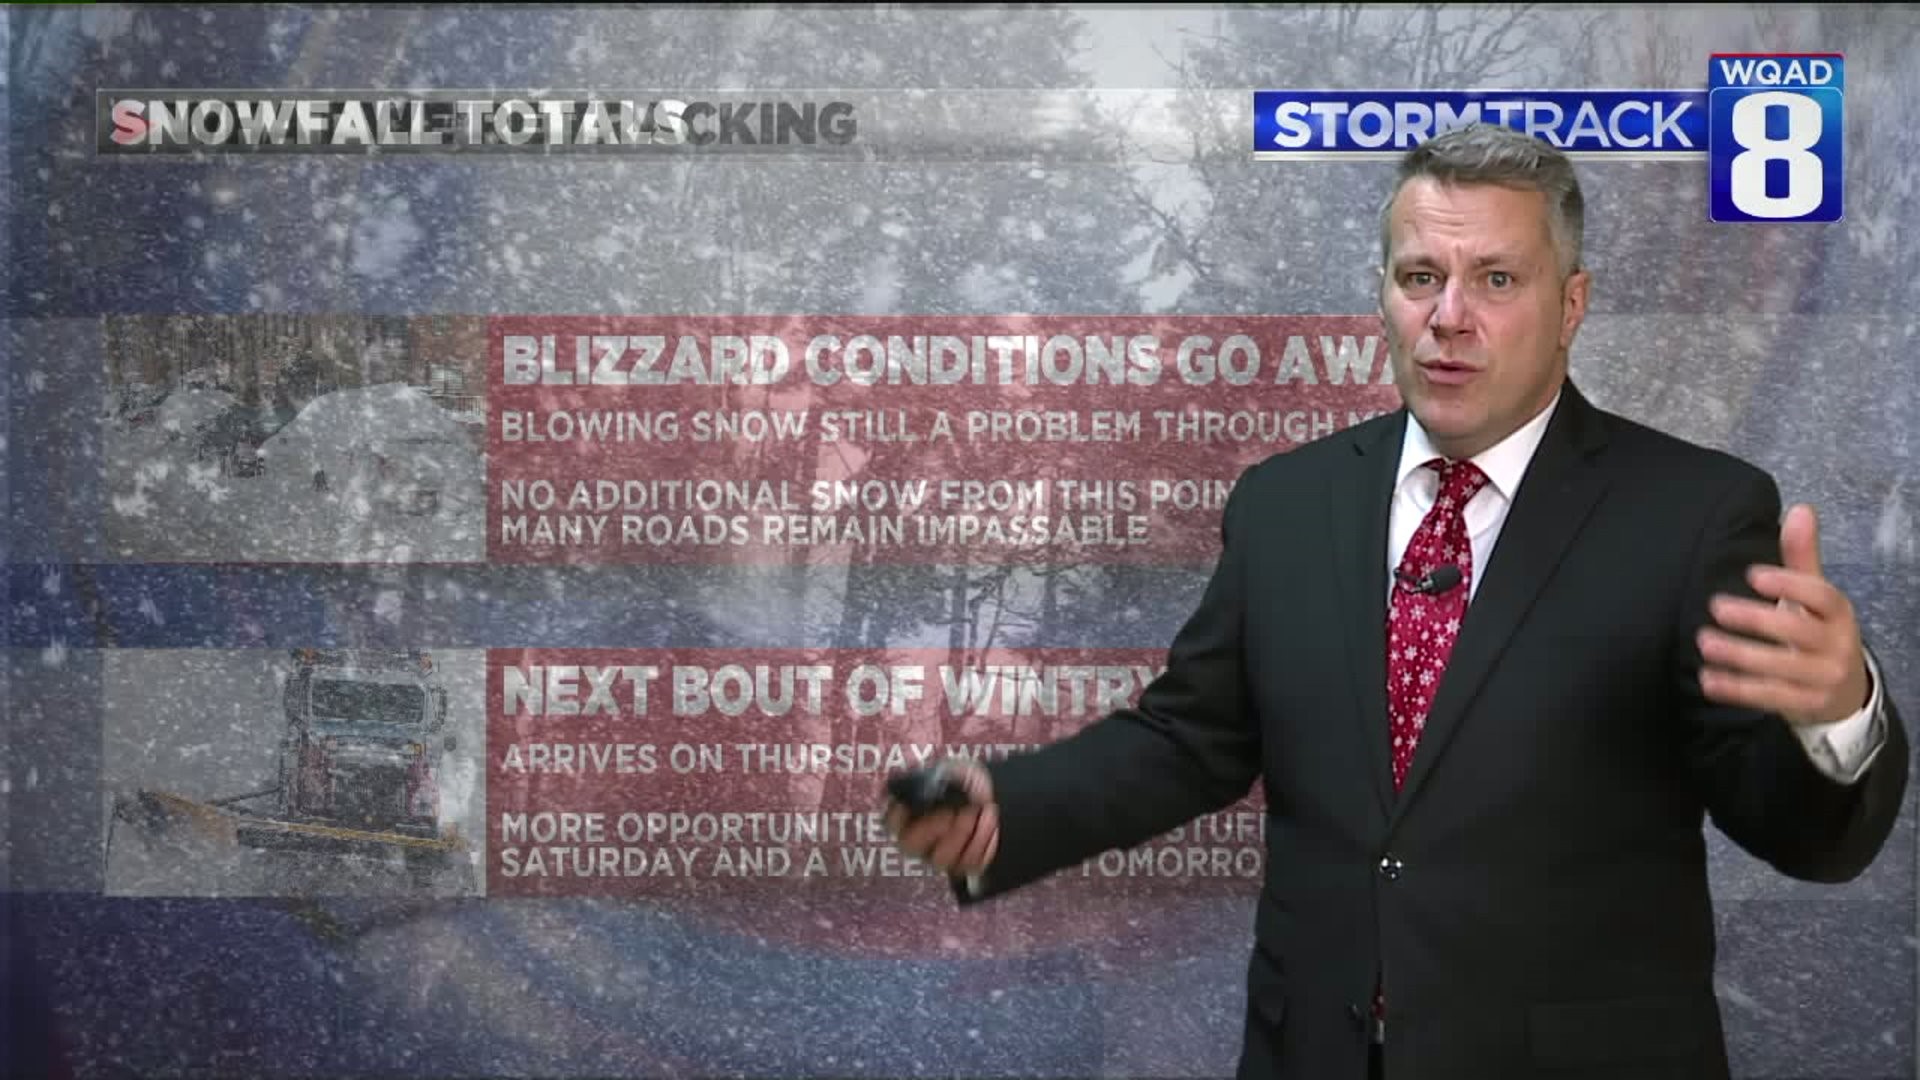 Eric Sorensen explains the blizzard conditions